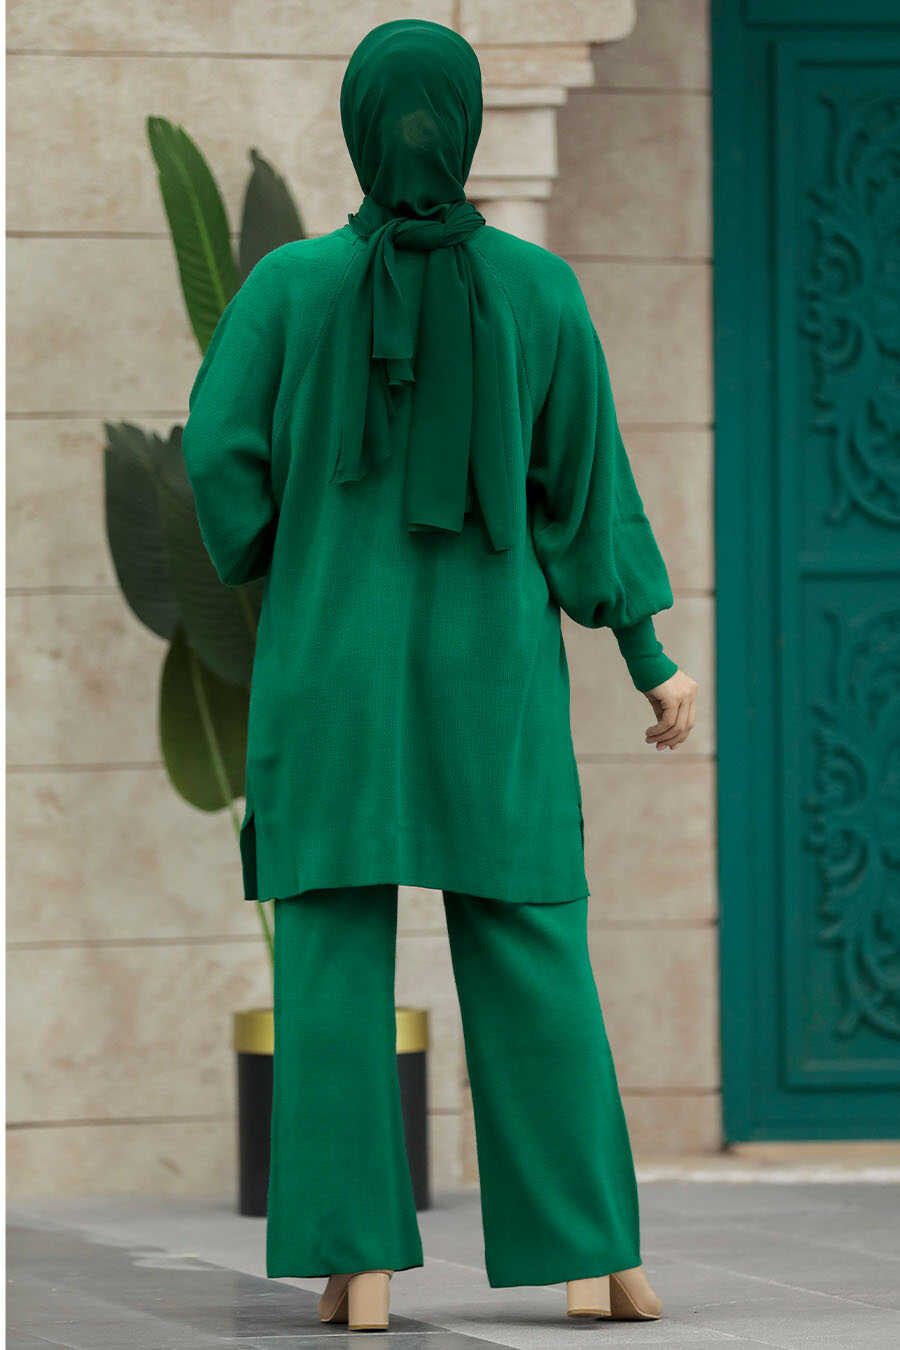 Neva Style - Emerald Green Modest Knitwear Dual Dress 34262ZY